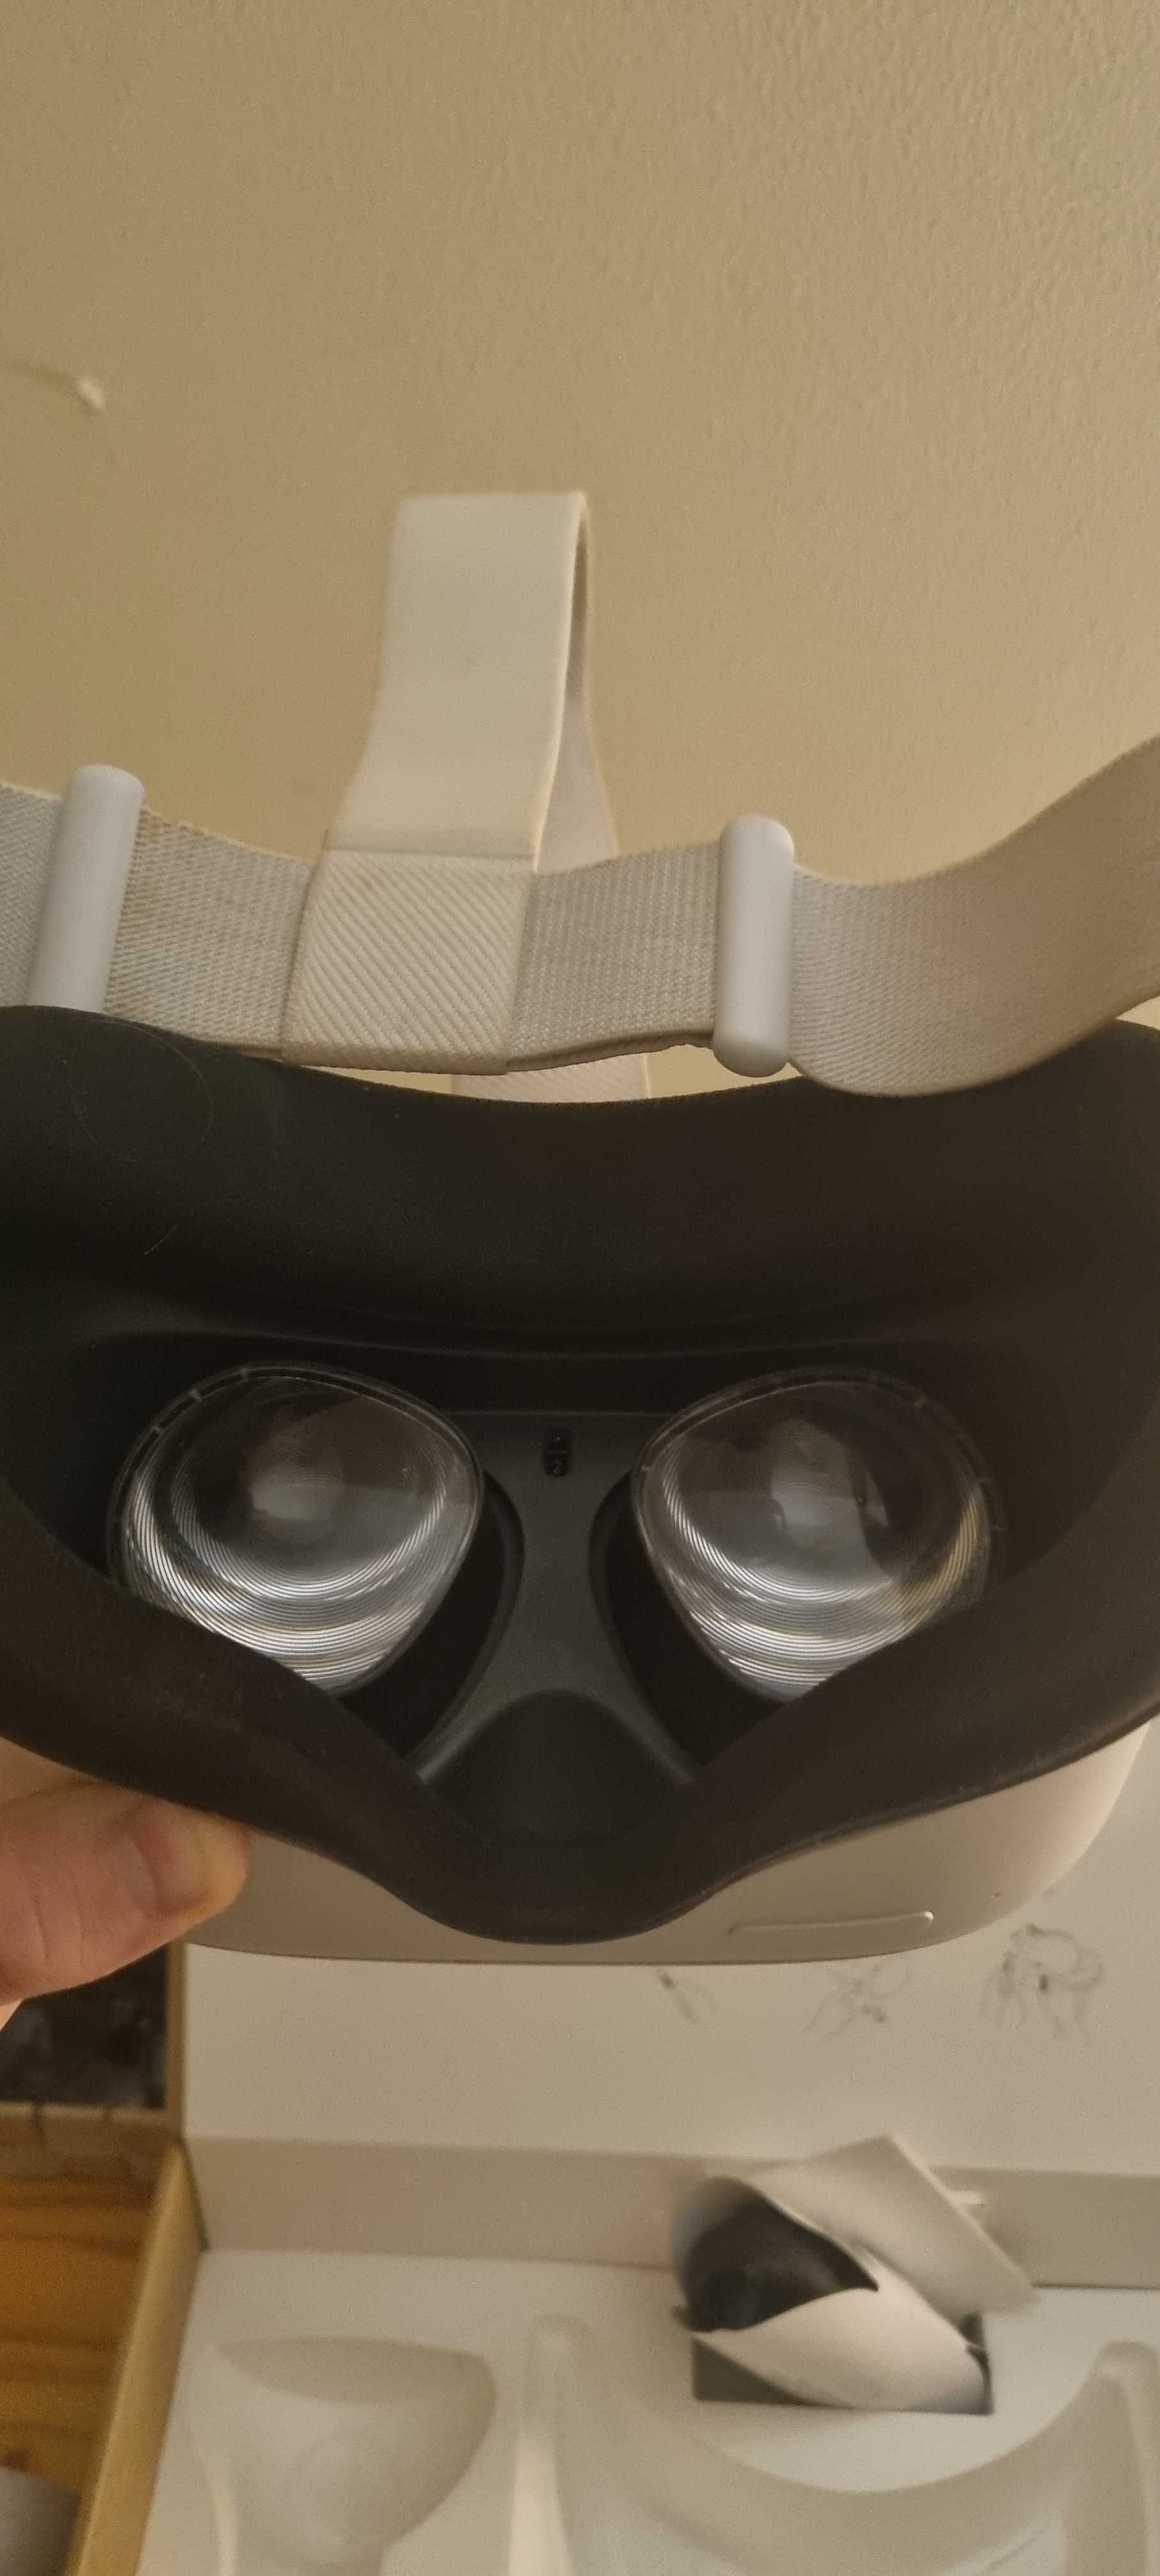 Vând/schimb cască Oculus quest 2